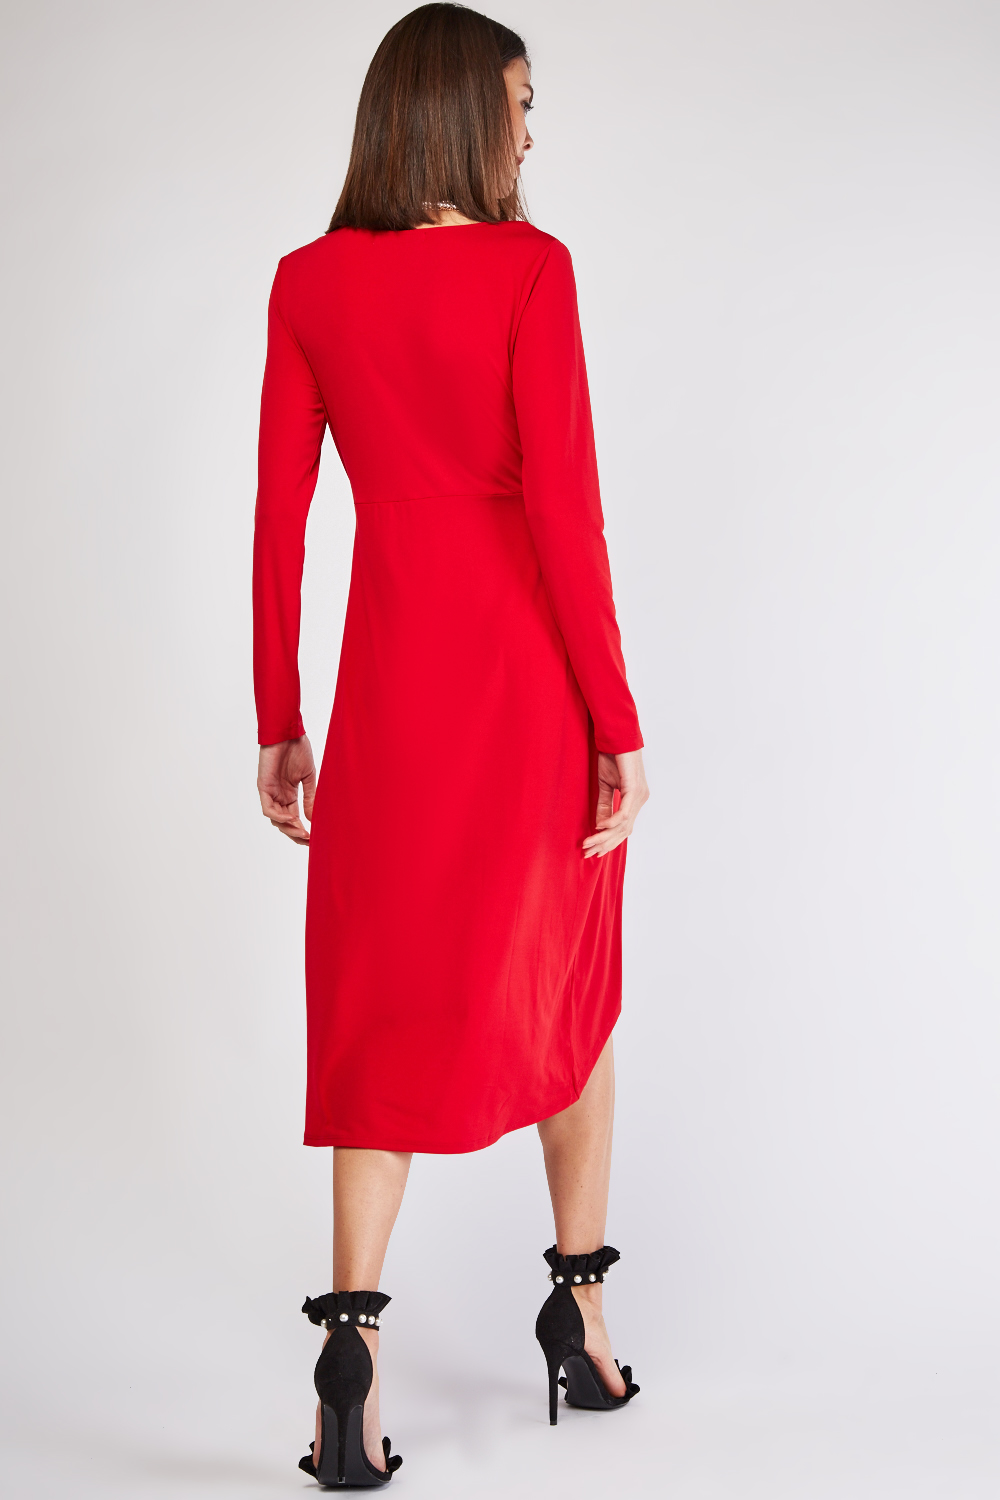 Dark Red Dip Hem Wrap Dress - Just $6